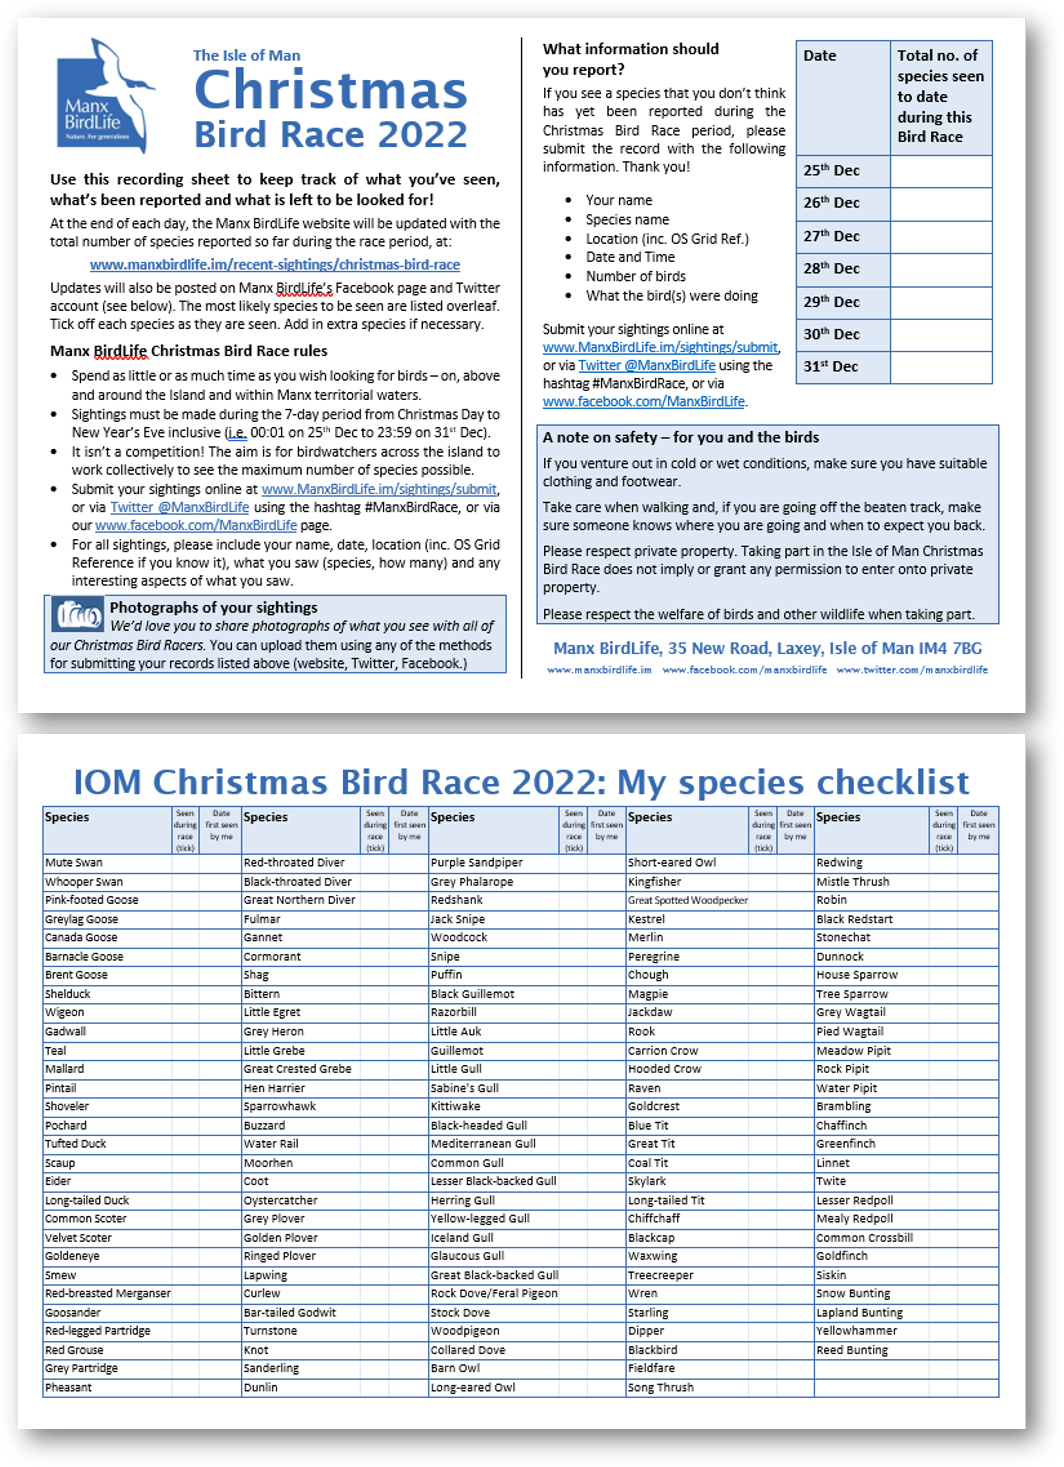 Manx BirdLife Christmas Bird Race Species Checklist 2022